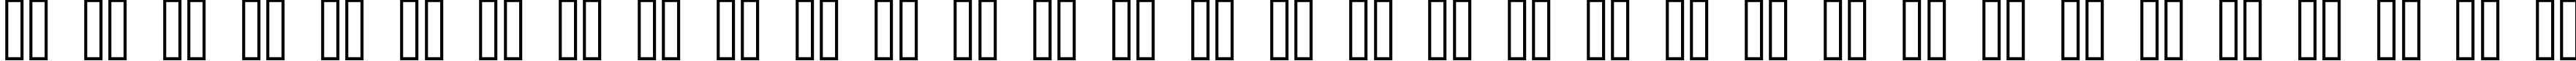 Пример написания русского алфавита шрифтом italic 08_65